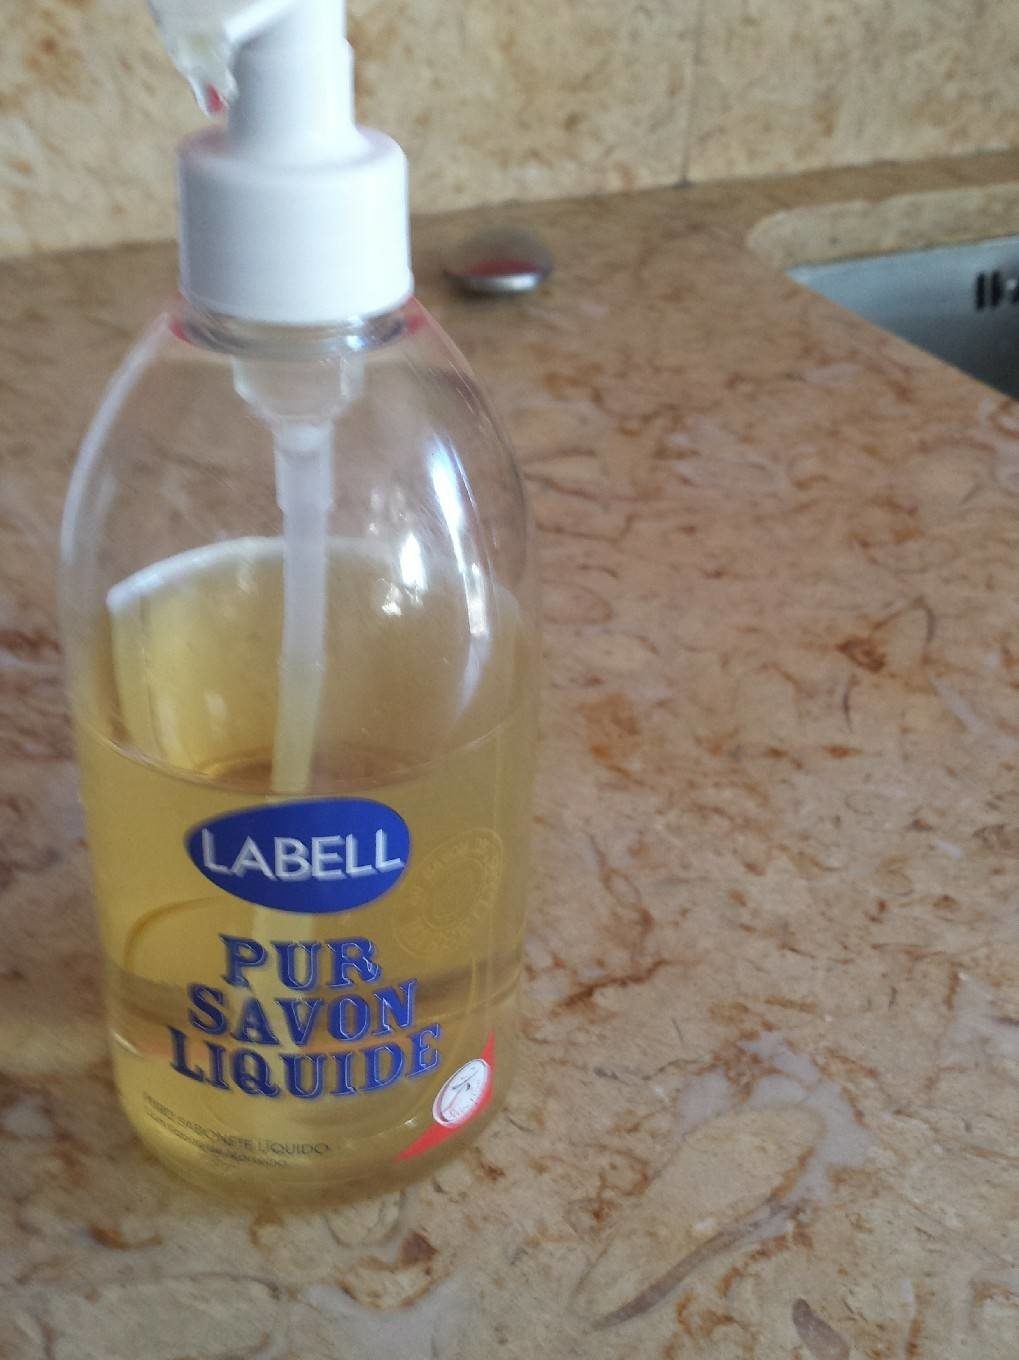 Pur savon liquide - Product - fr